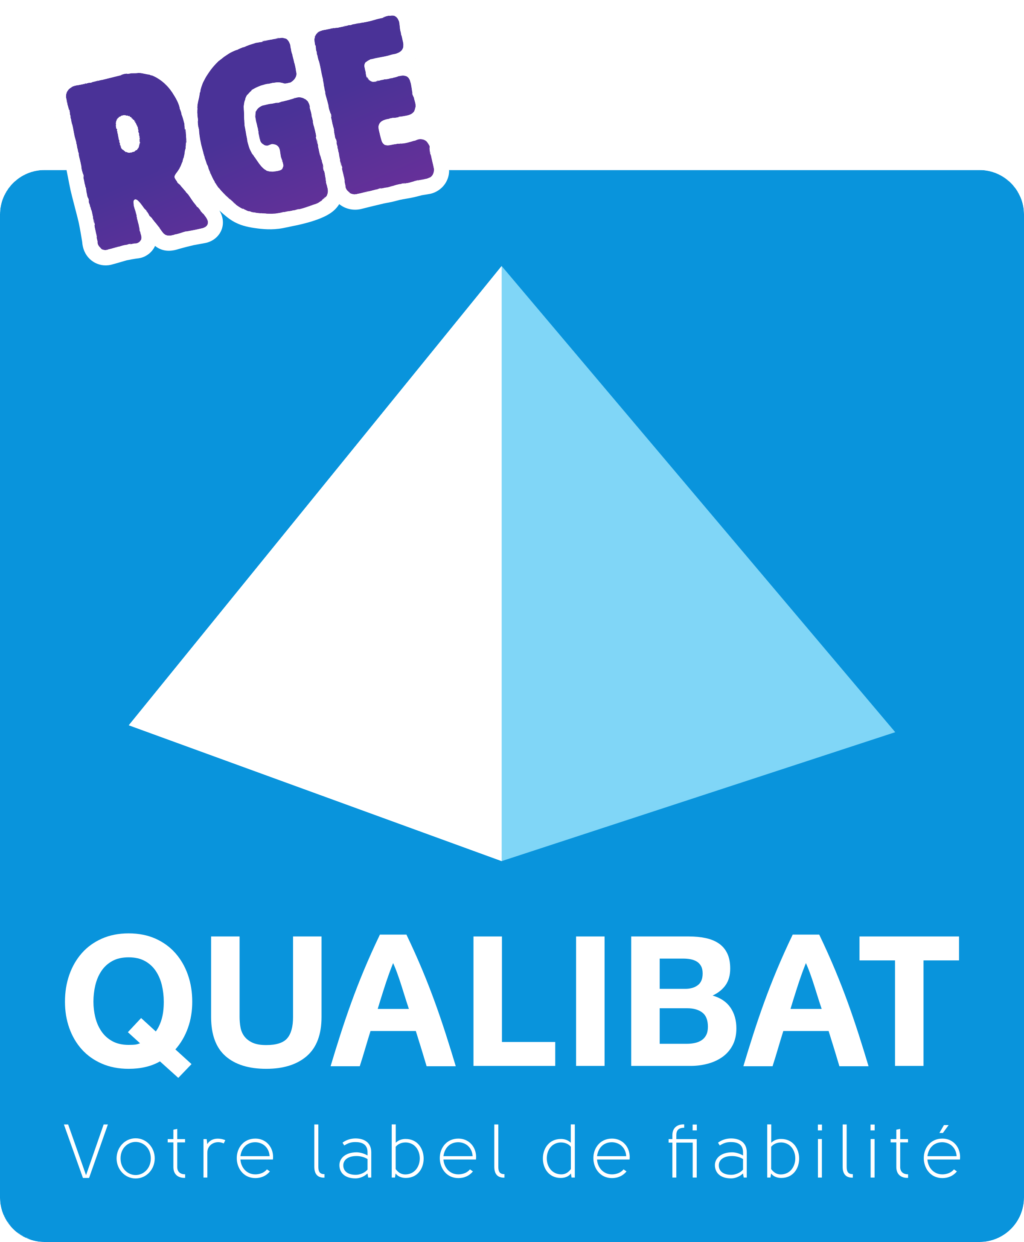 Logo RGE QUALIBAT